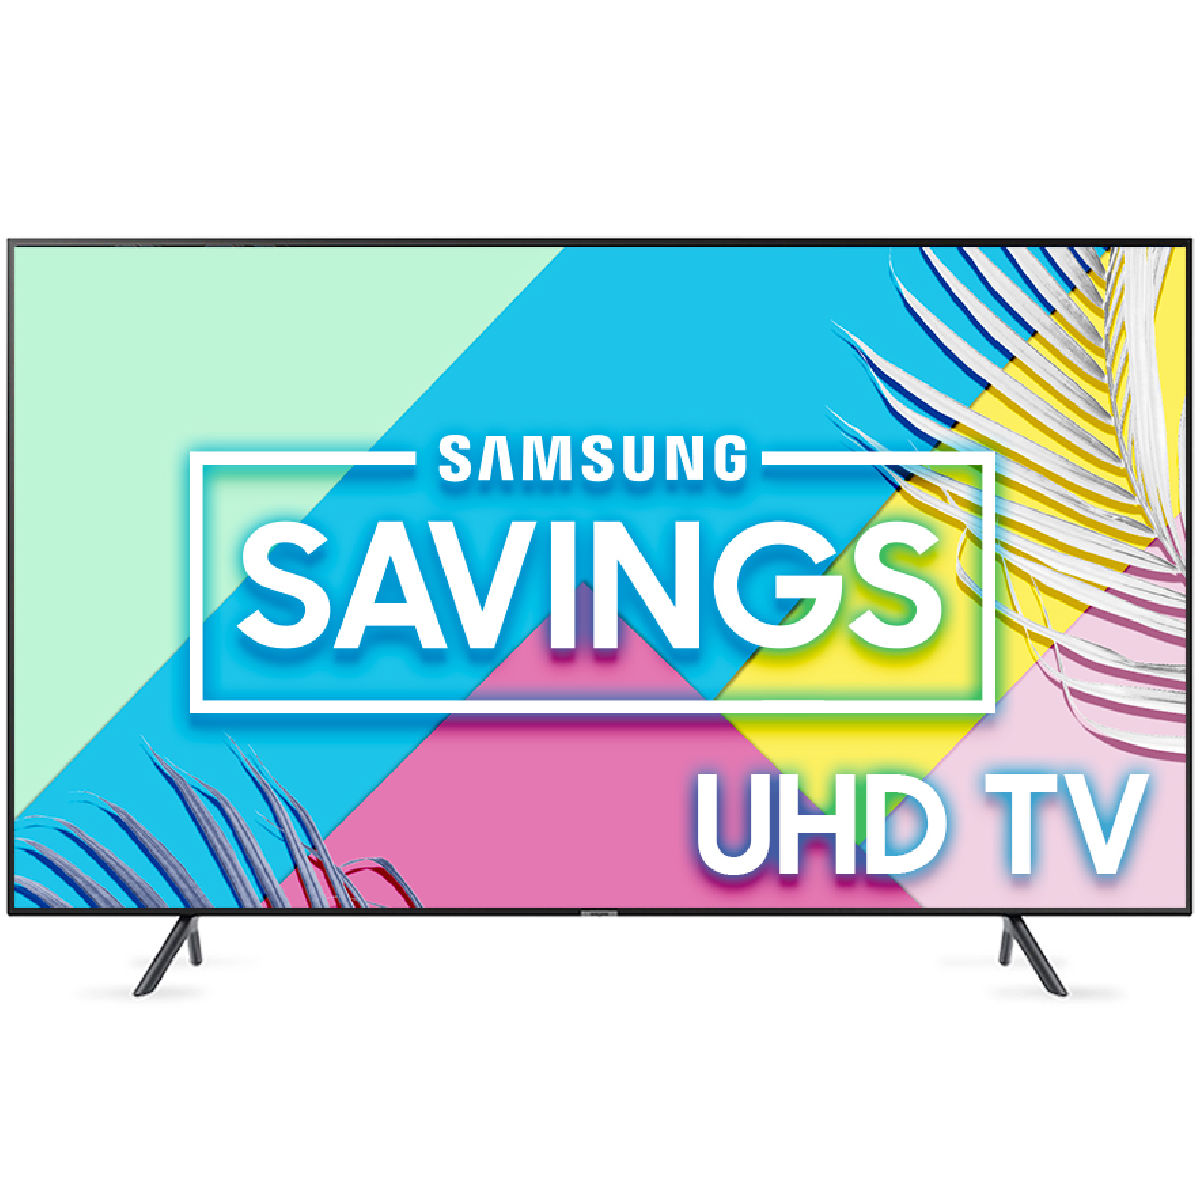 Samsung UN55RU7100 55-Inch 4K Ultra Smart HDTV